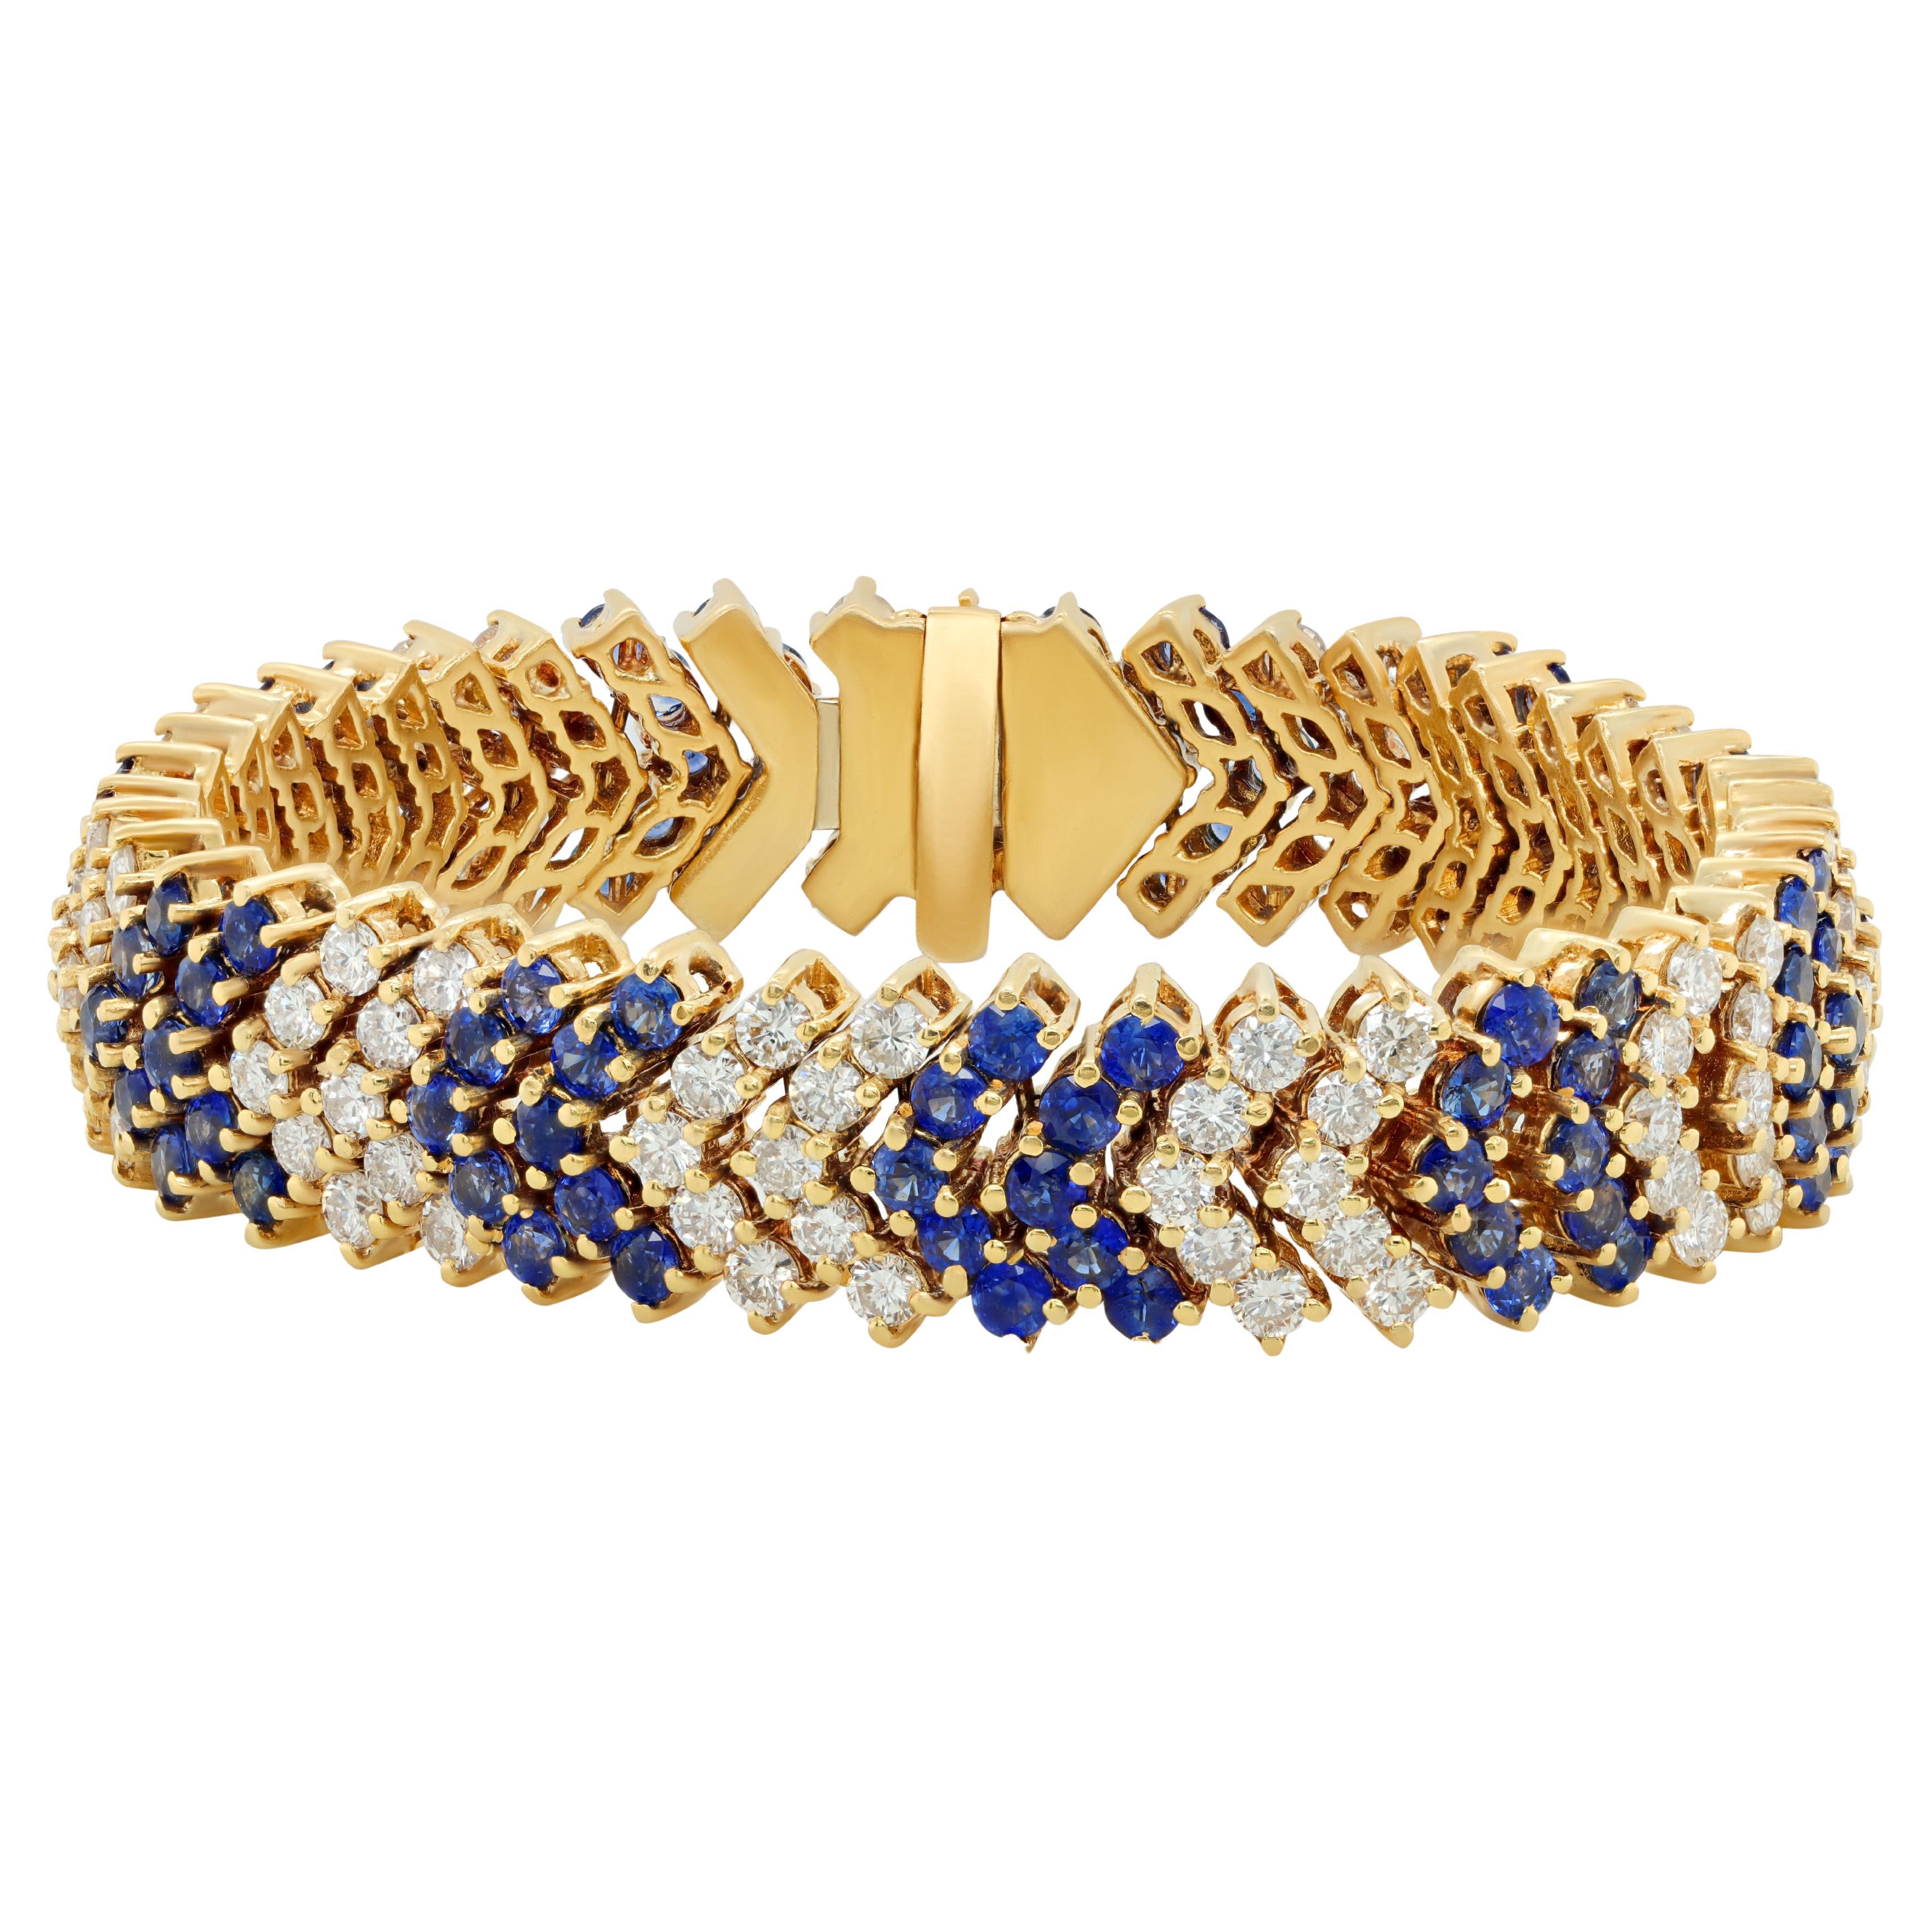 Diana M. 14.39 Carat Blue Sapphire and Diamond V-Shaped Piece Bracelet